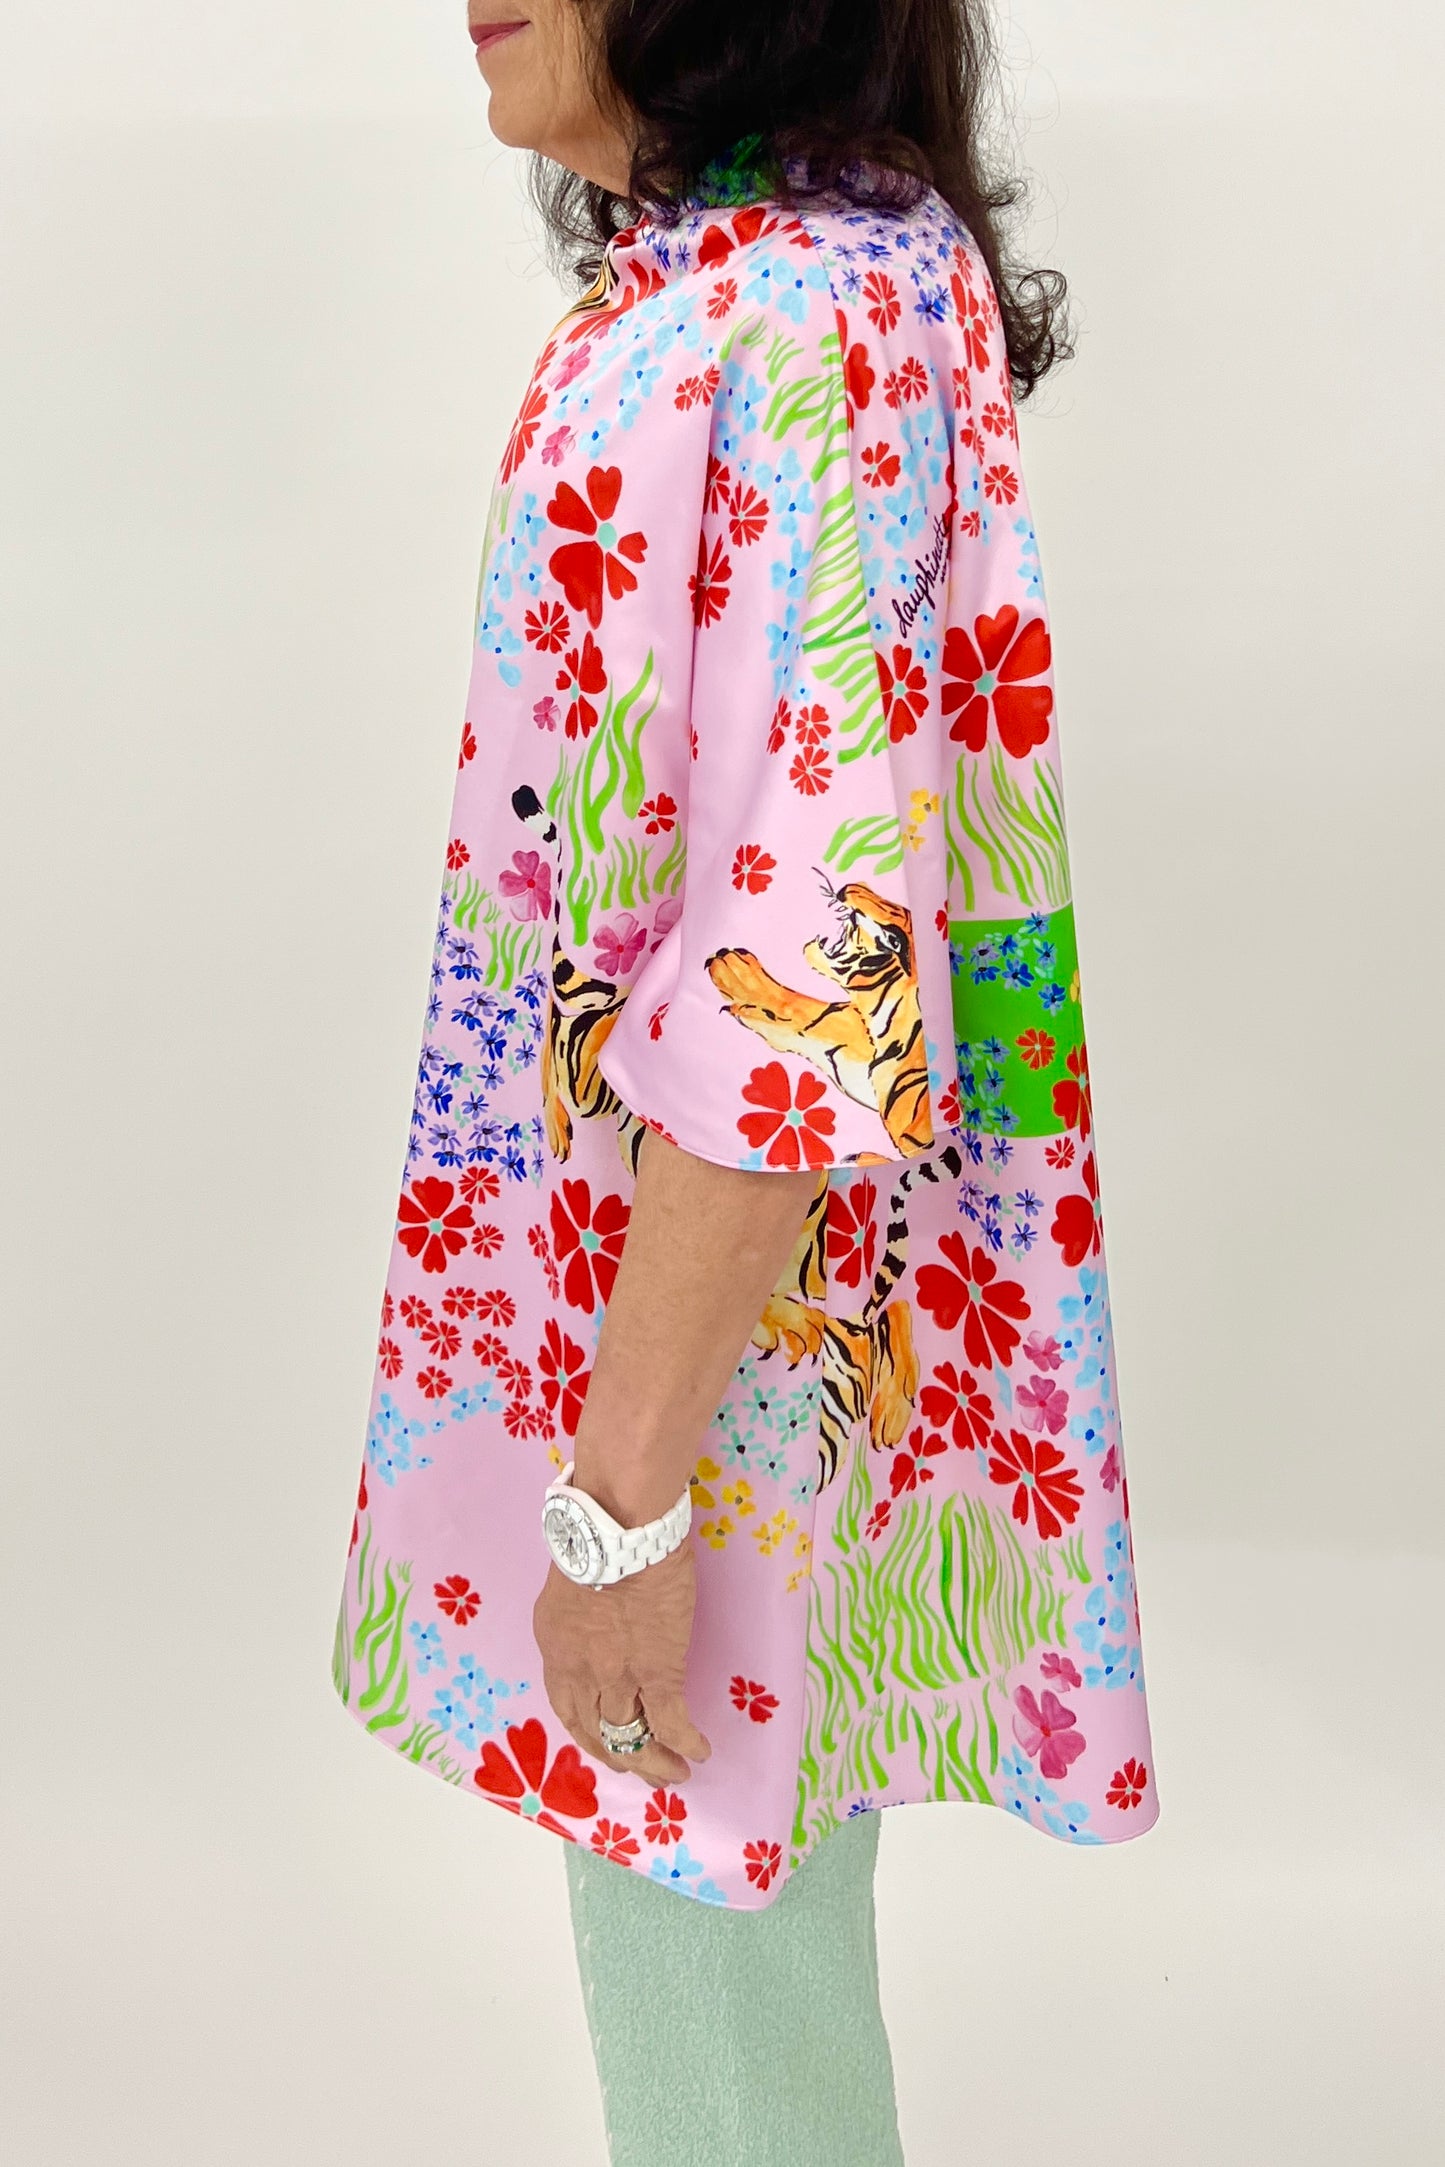 Dauphinette - Floatkerchief Mini Dress: Tiger Blooms